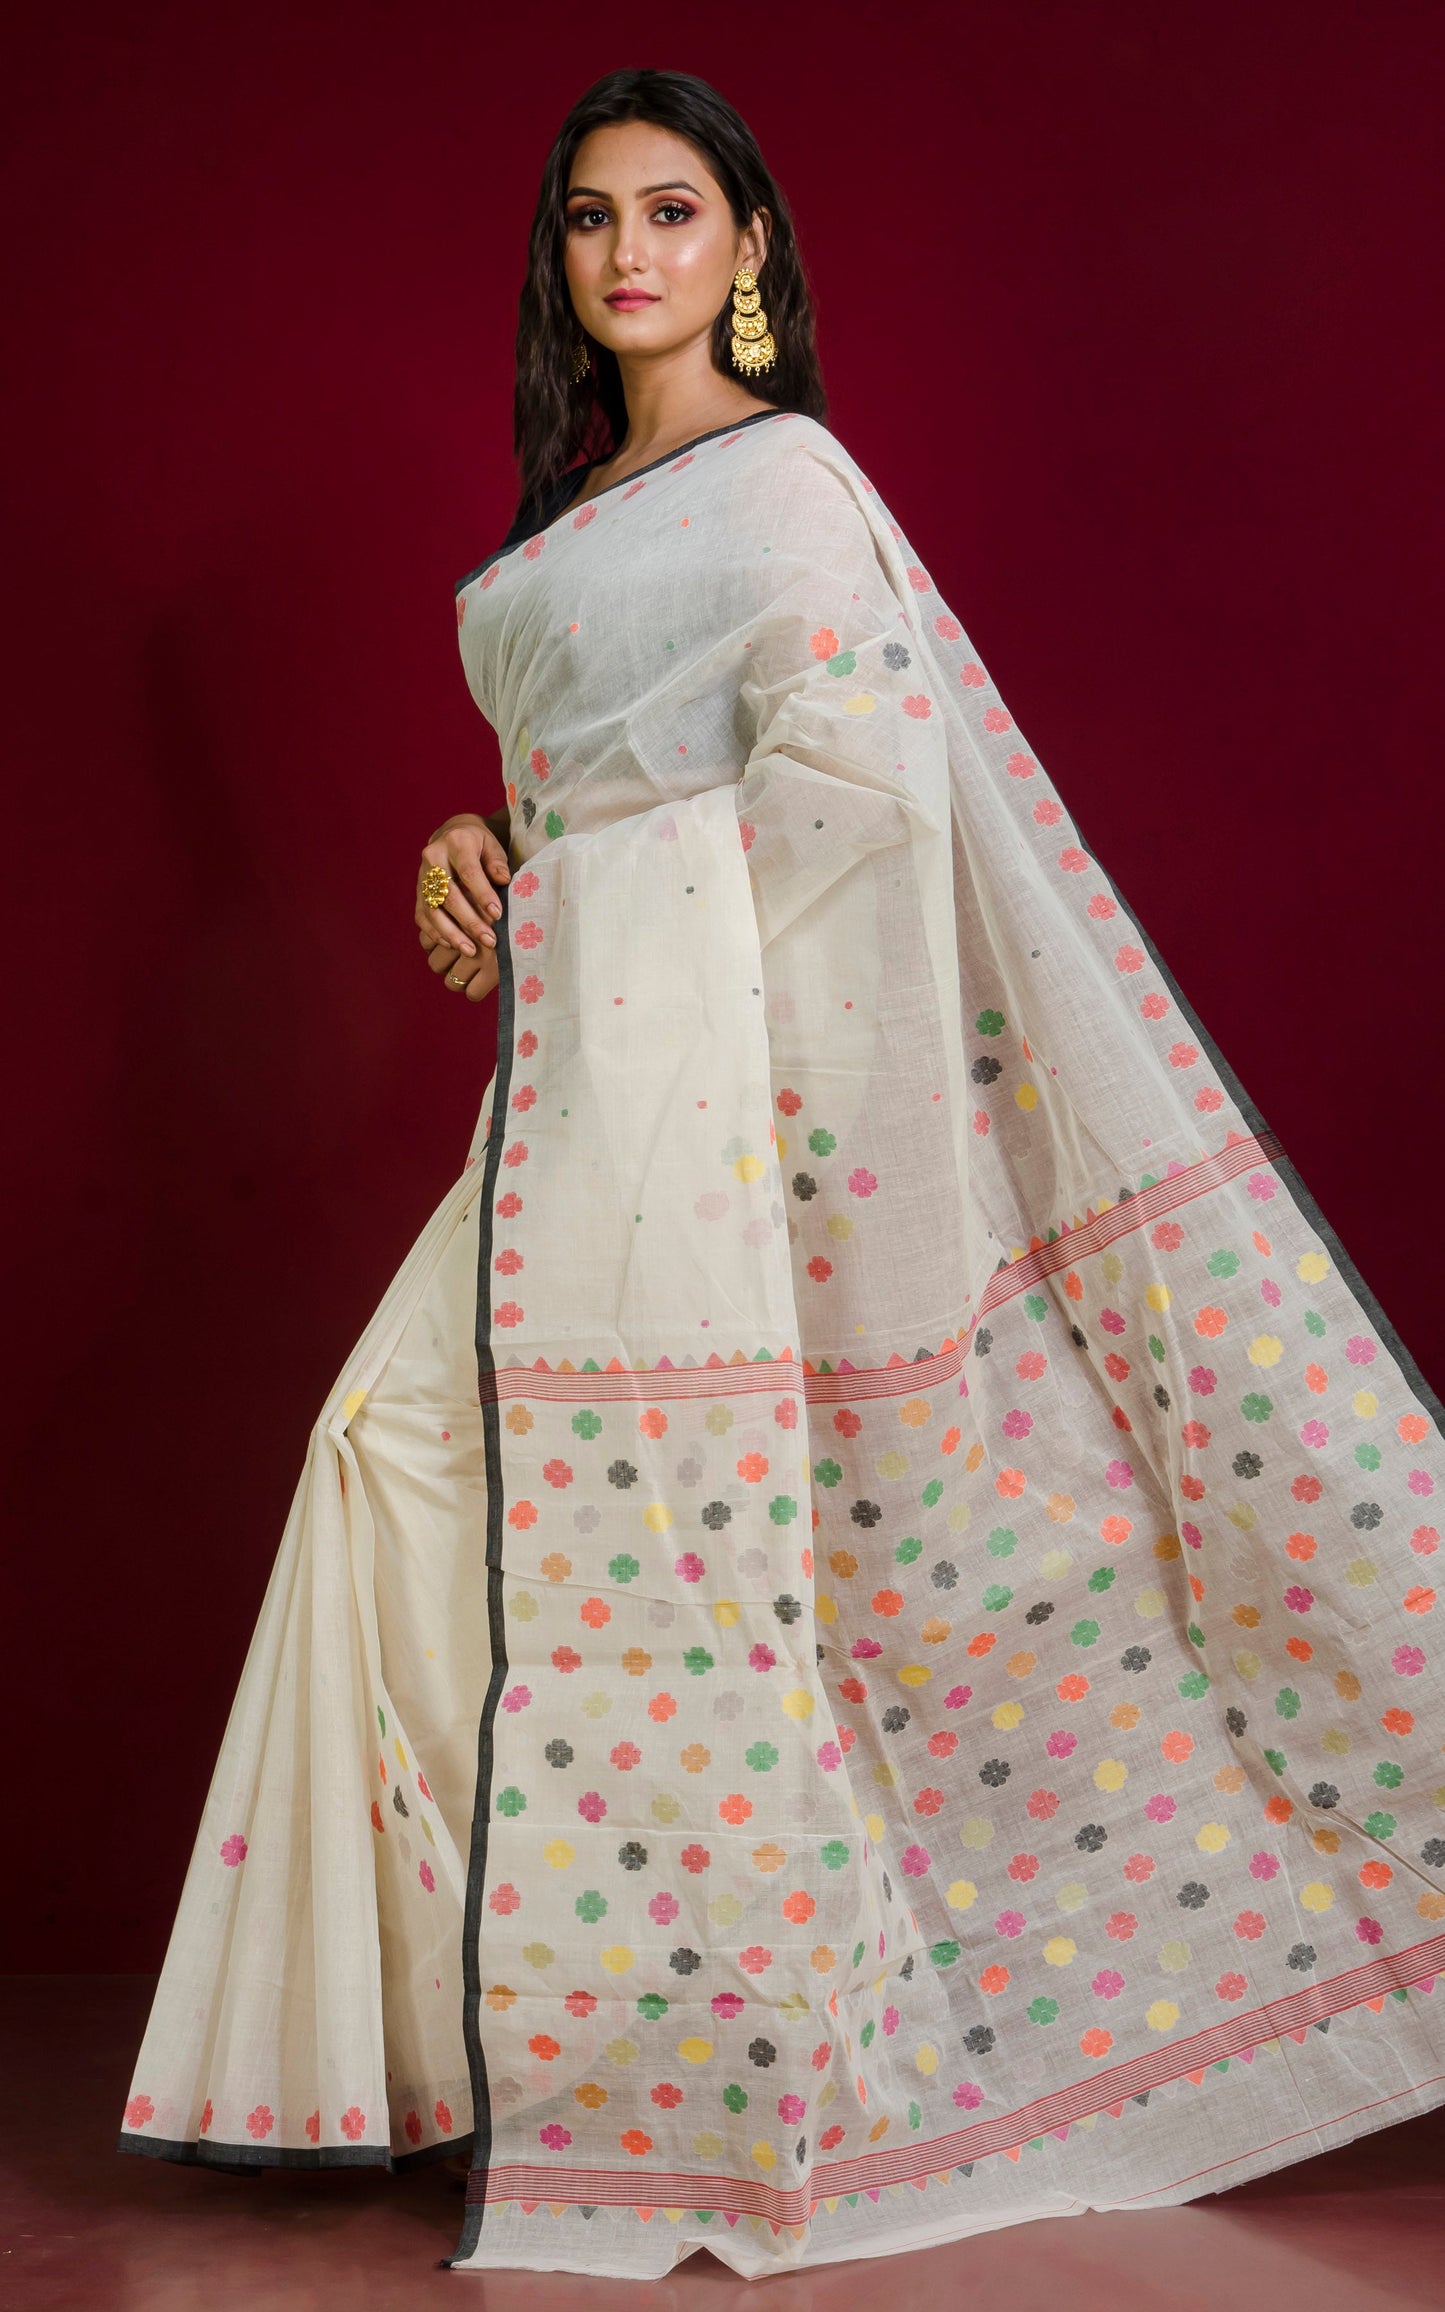 Premium Quality Hand Work Cotton Dhakai Jamdani Saree in Off White, Black and Multicolored Woven Thread Work